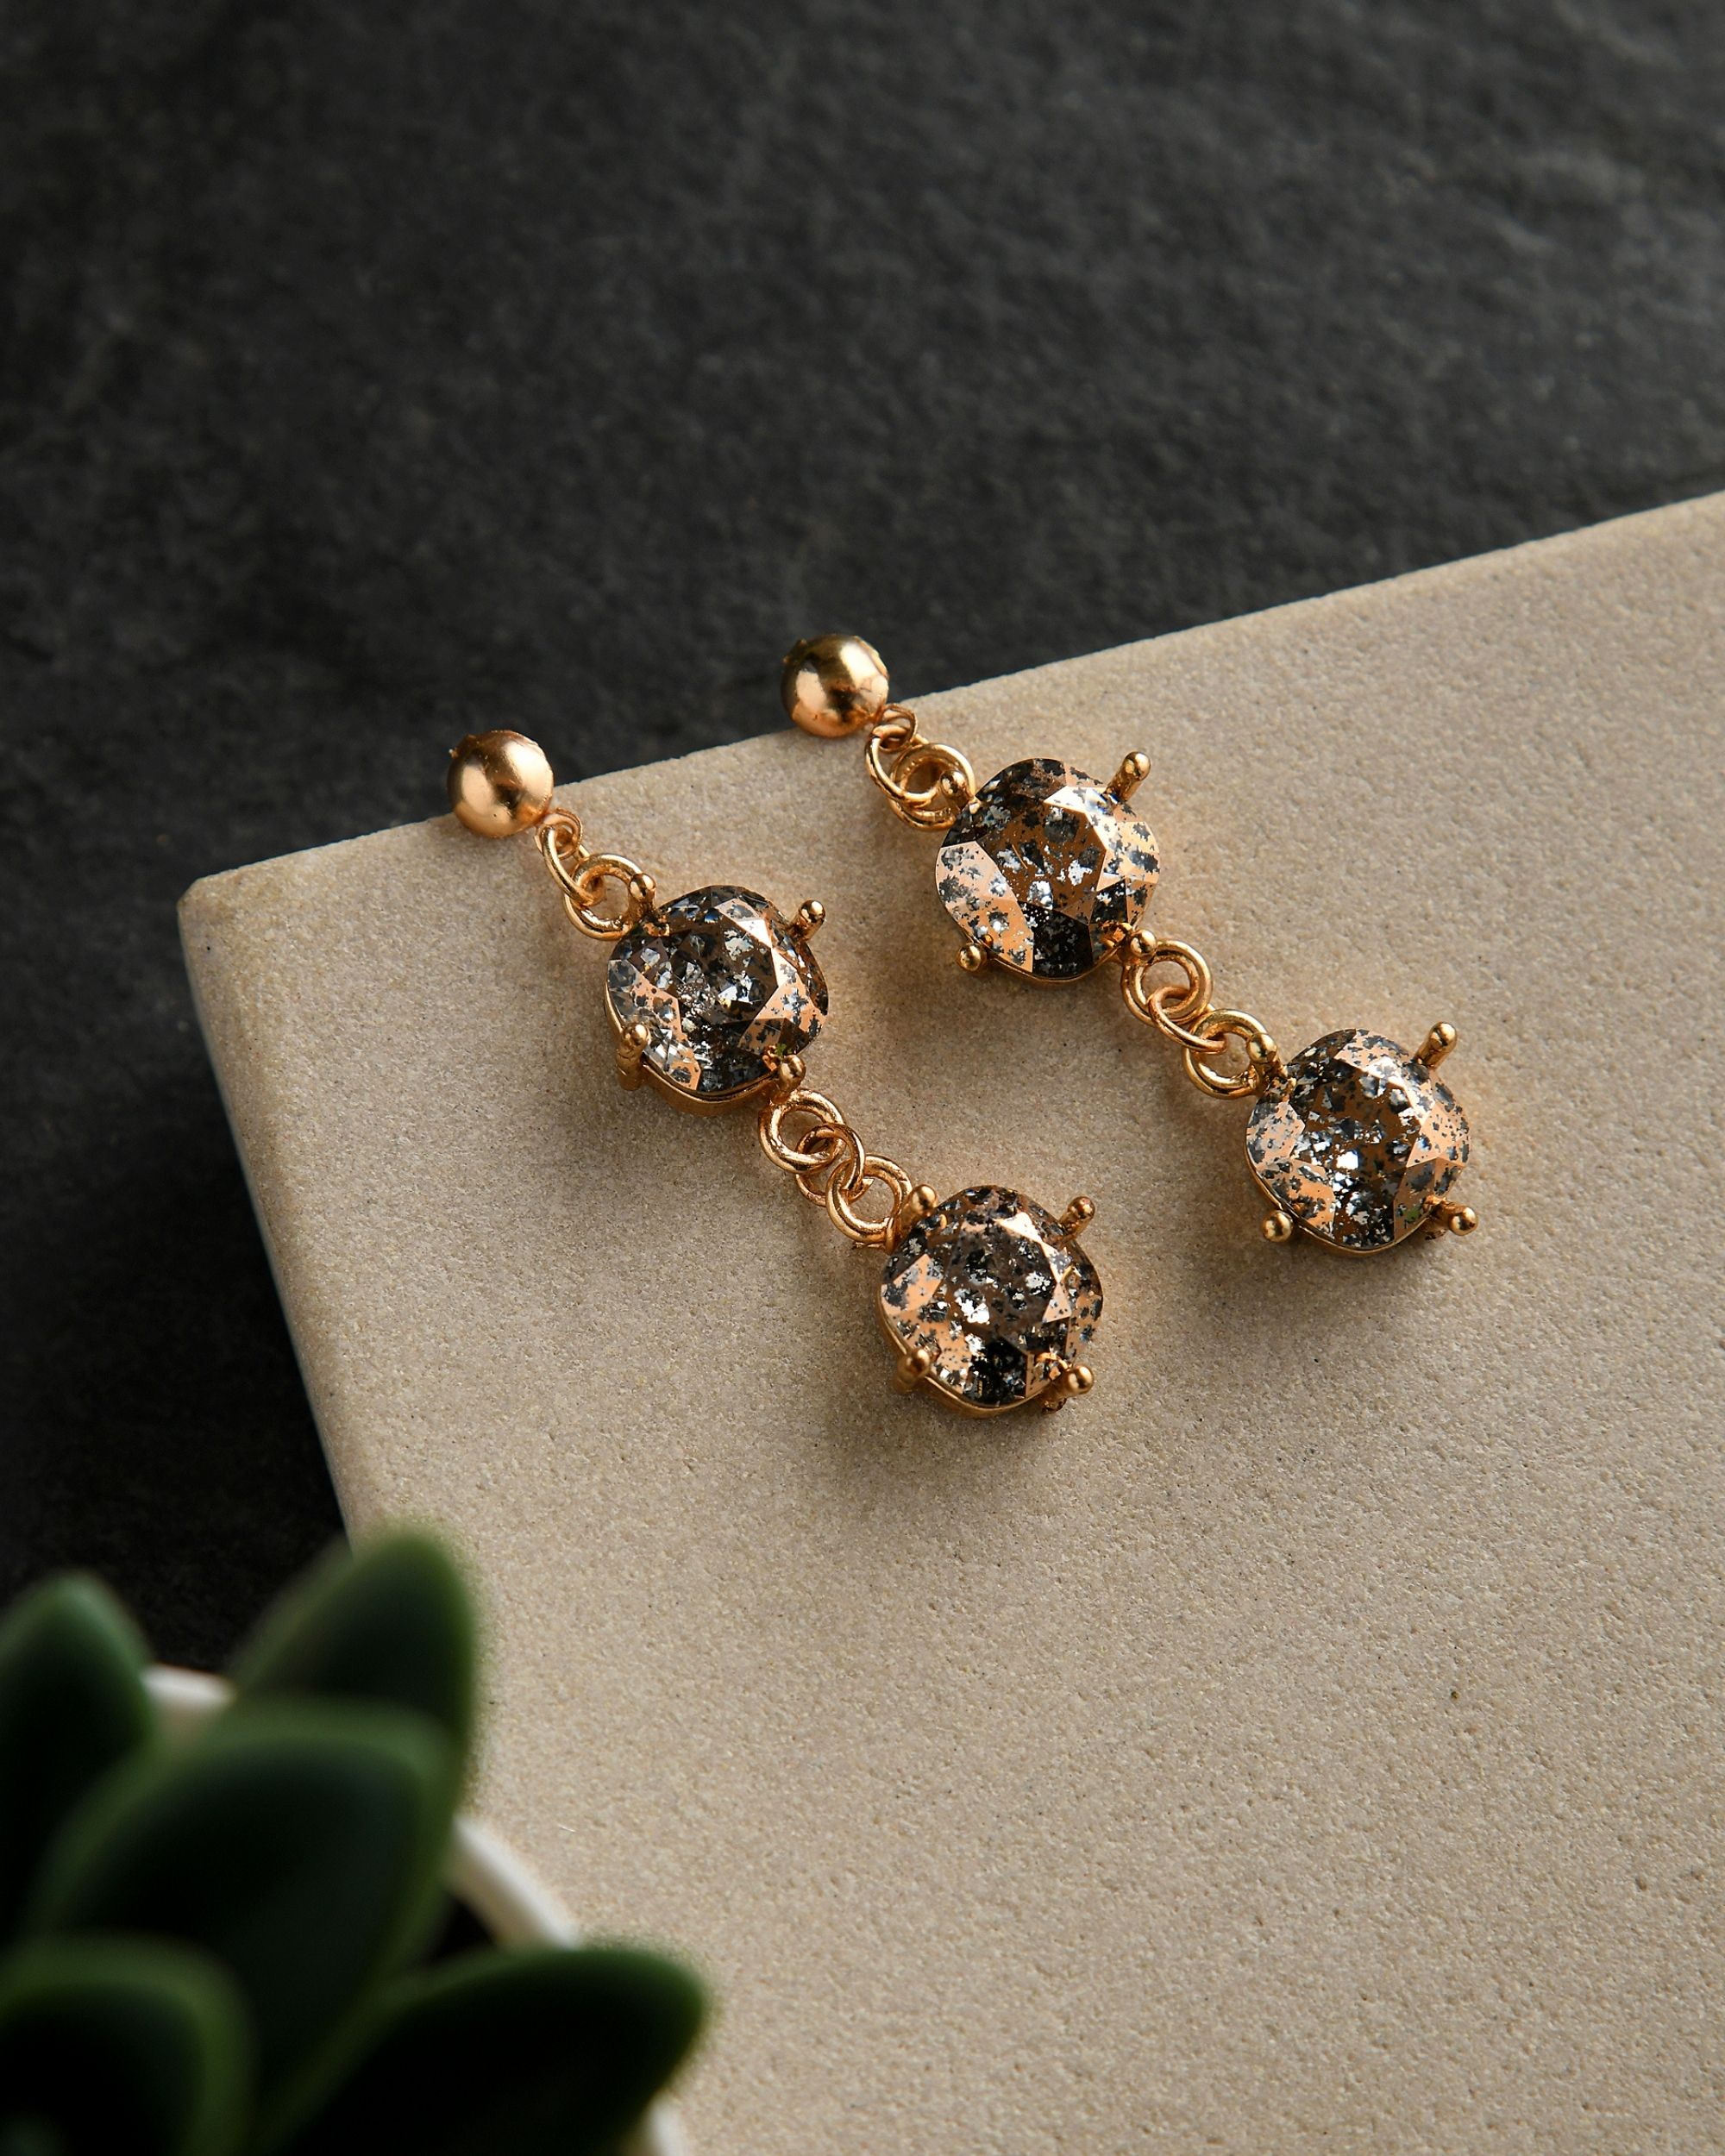 Crystal rose patina earrings